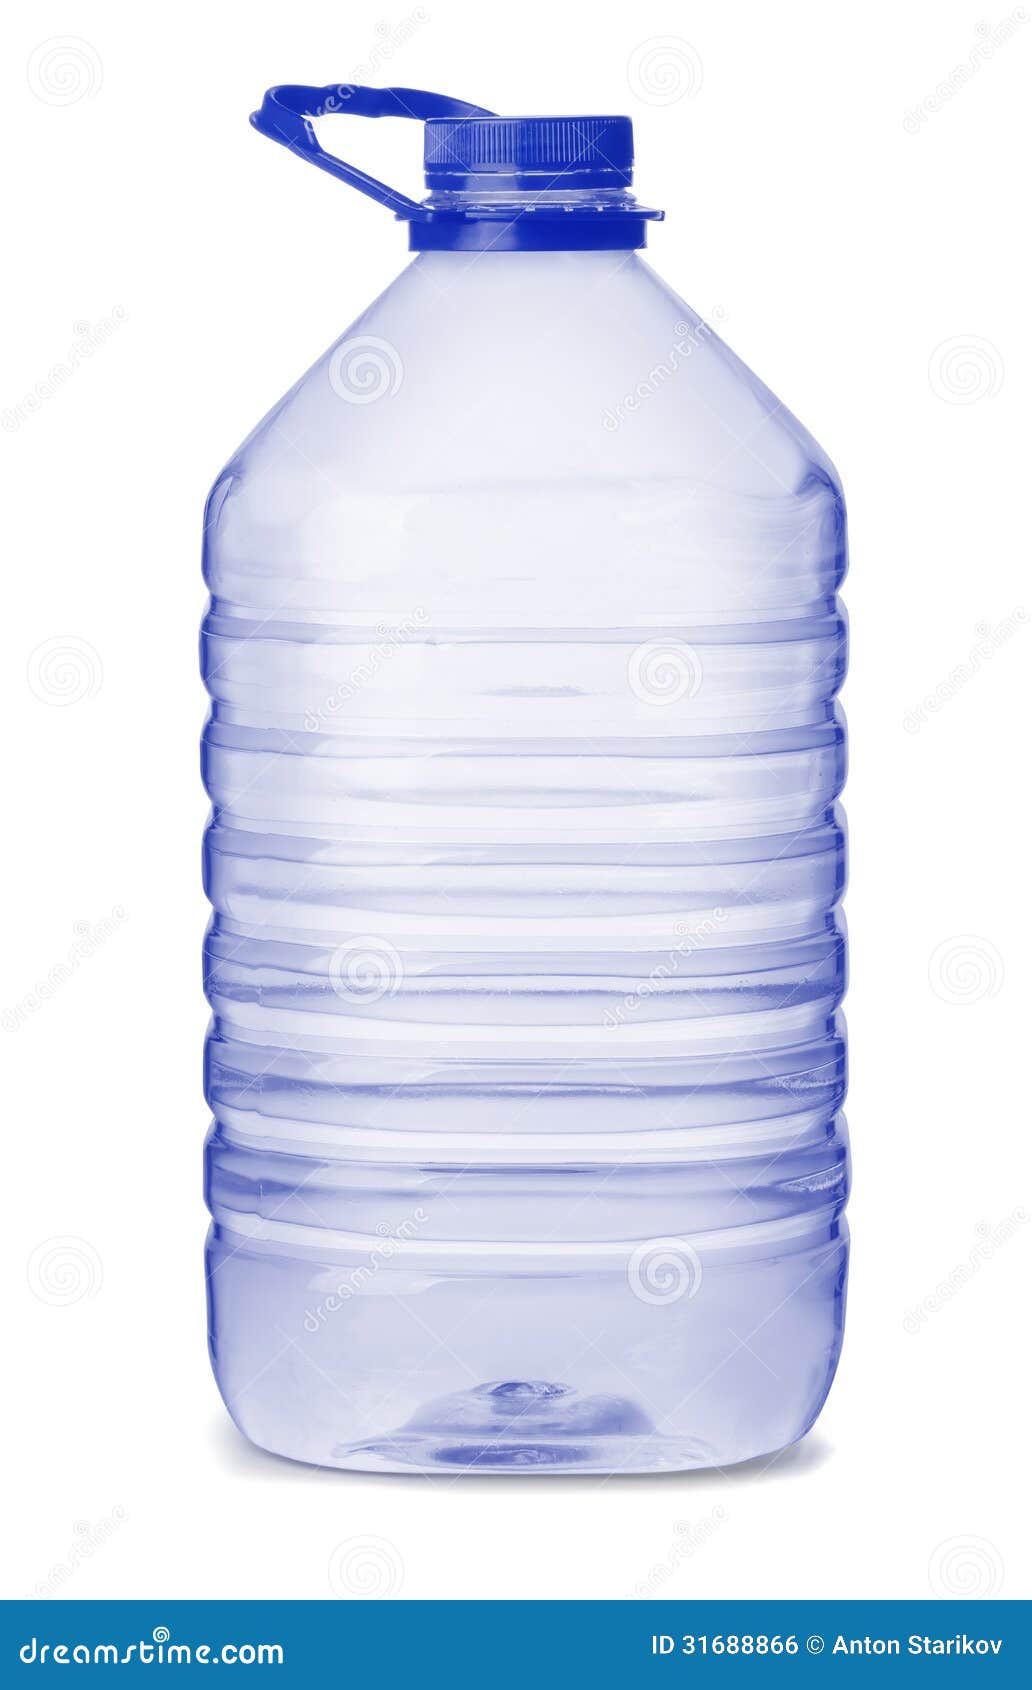 In the official online store File:Botella agua.JPG - Wikimedia Commons,  botella de agua